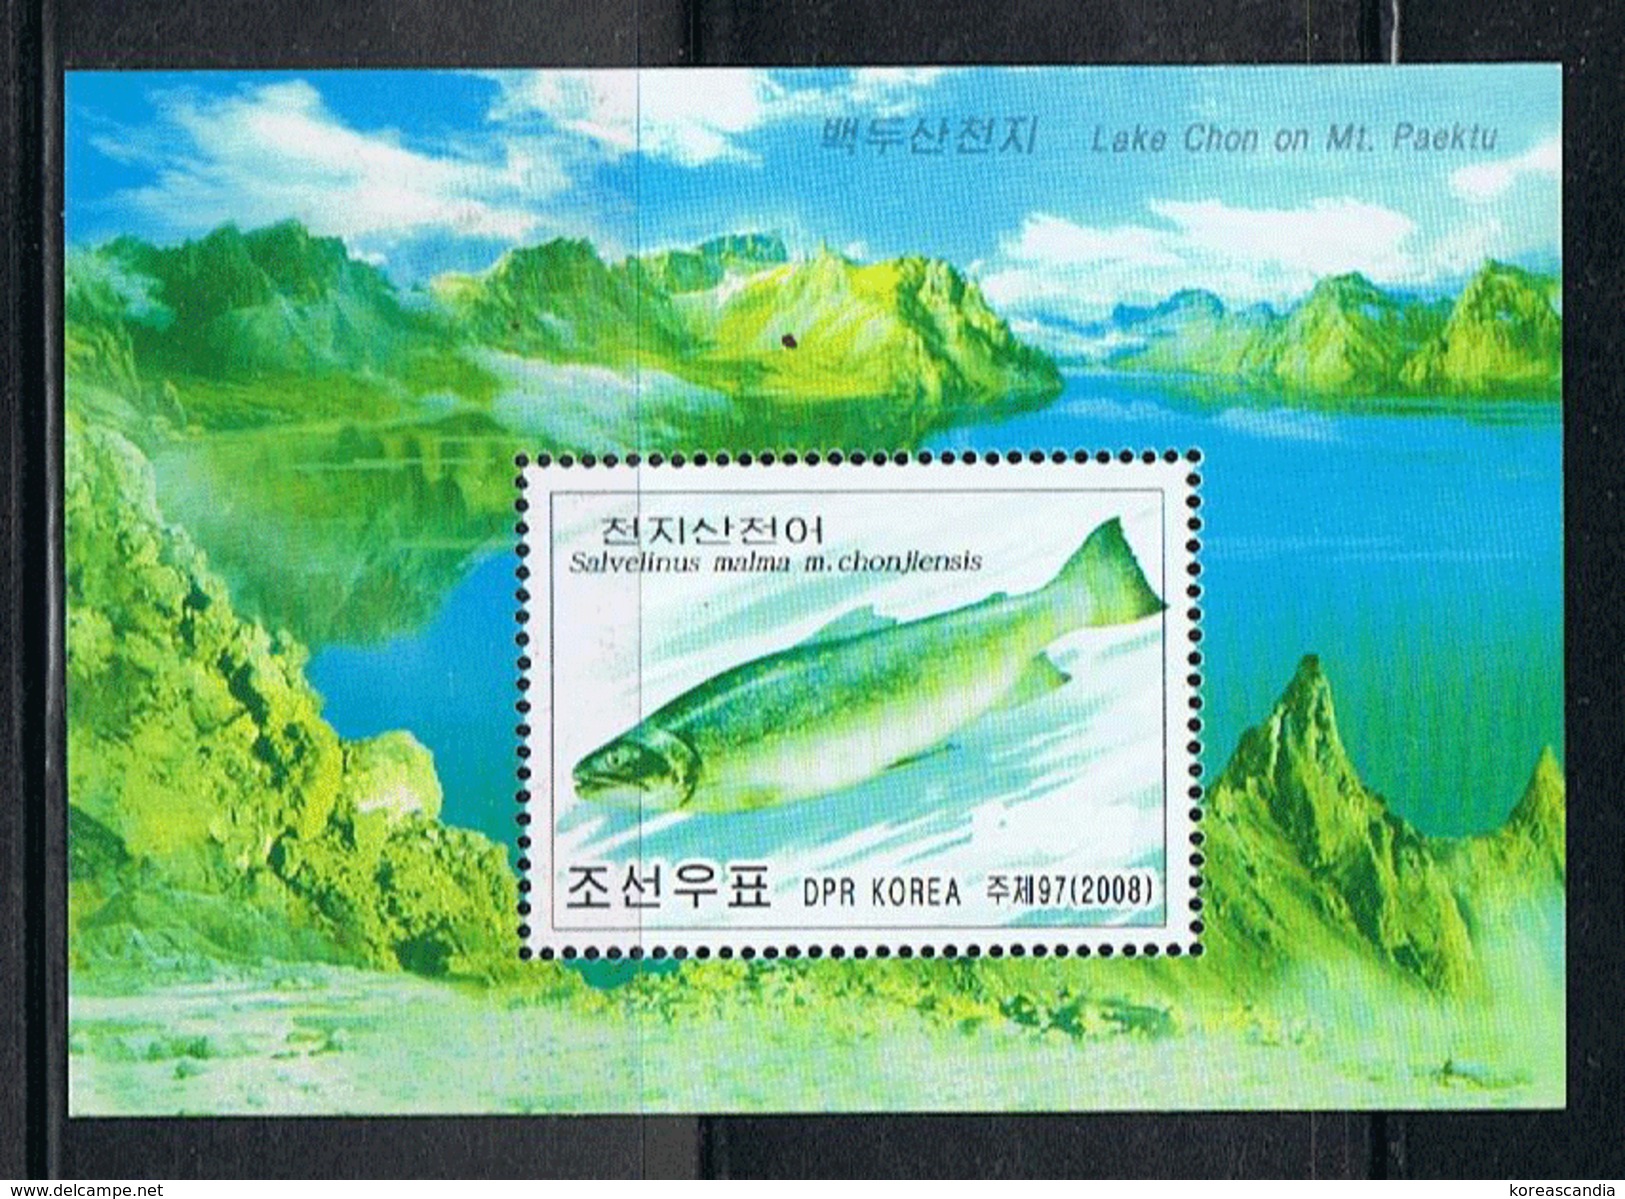 NORTH KOREA 2008 FISH MISSING VALUE AND COLORS ERROR SOUVENIR SHEET - VERY RARE - Fehldrucke